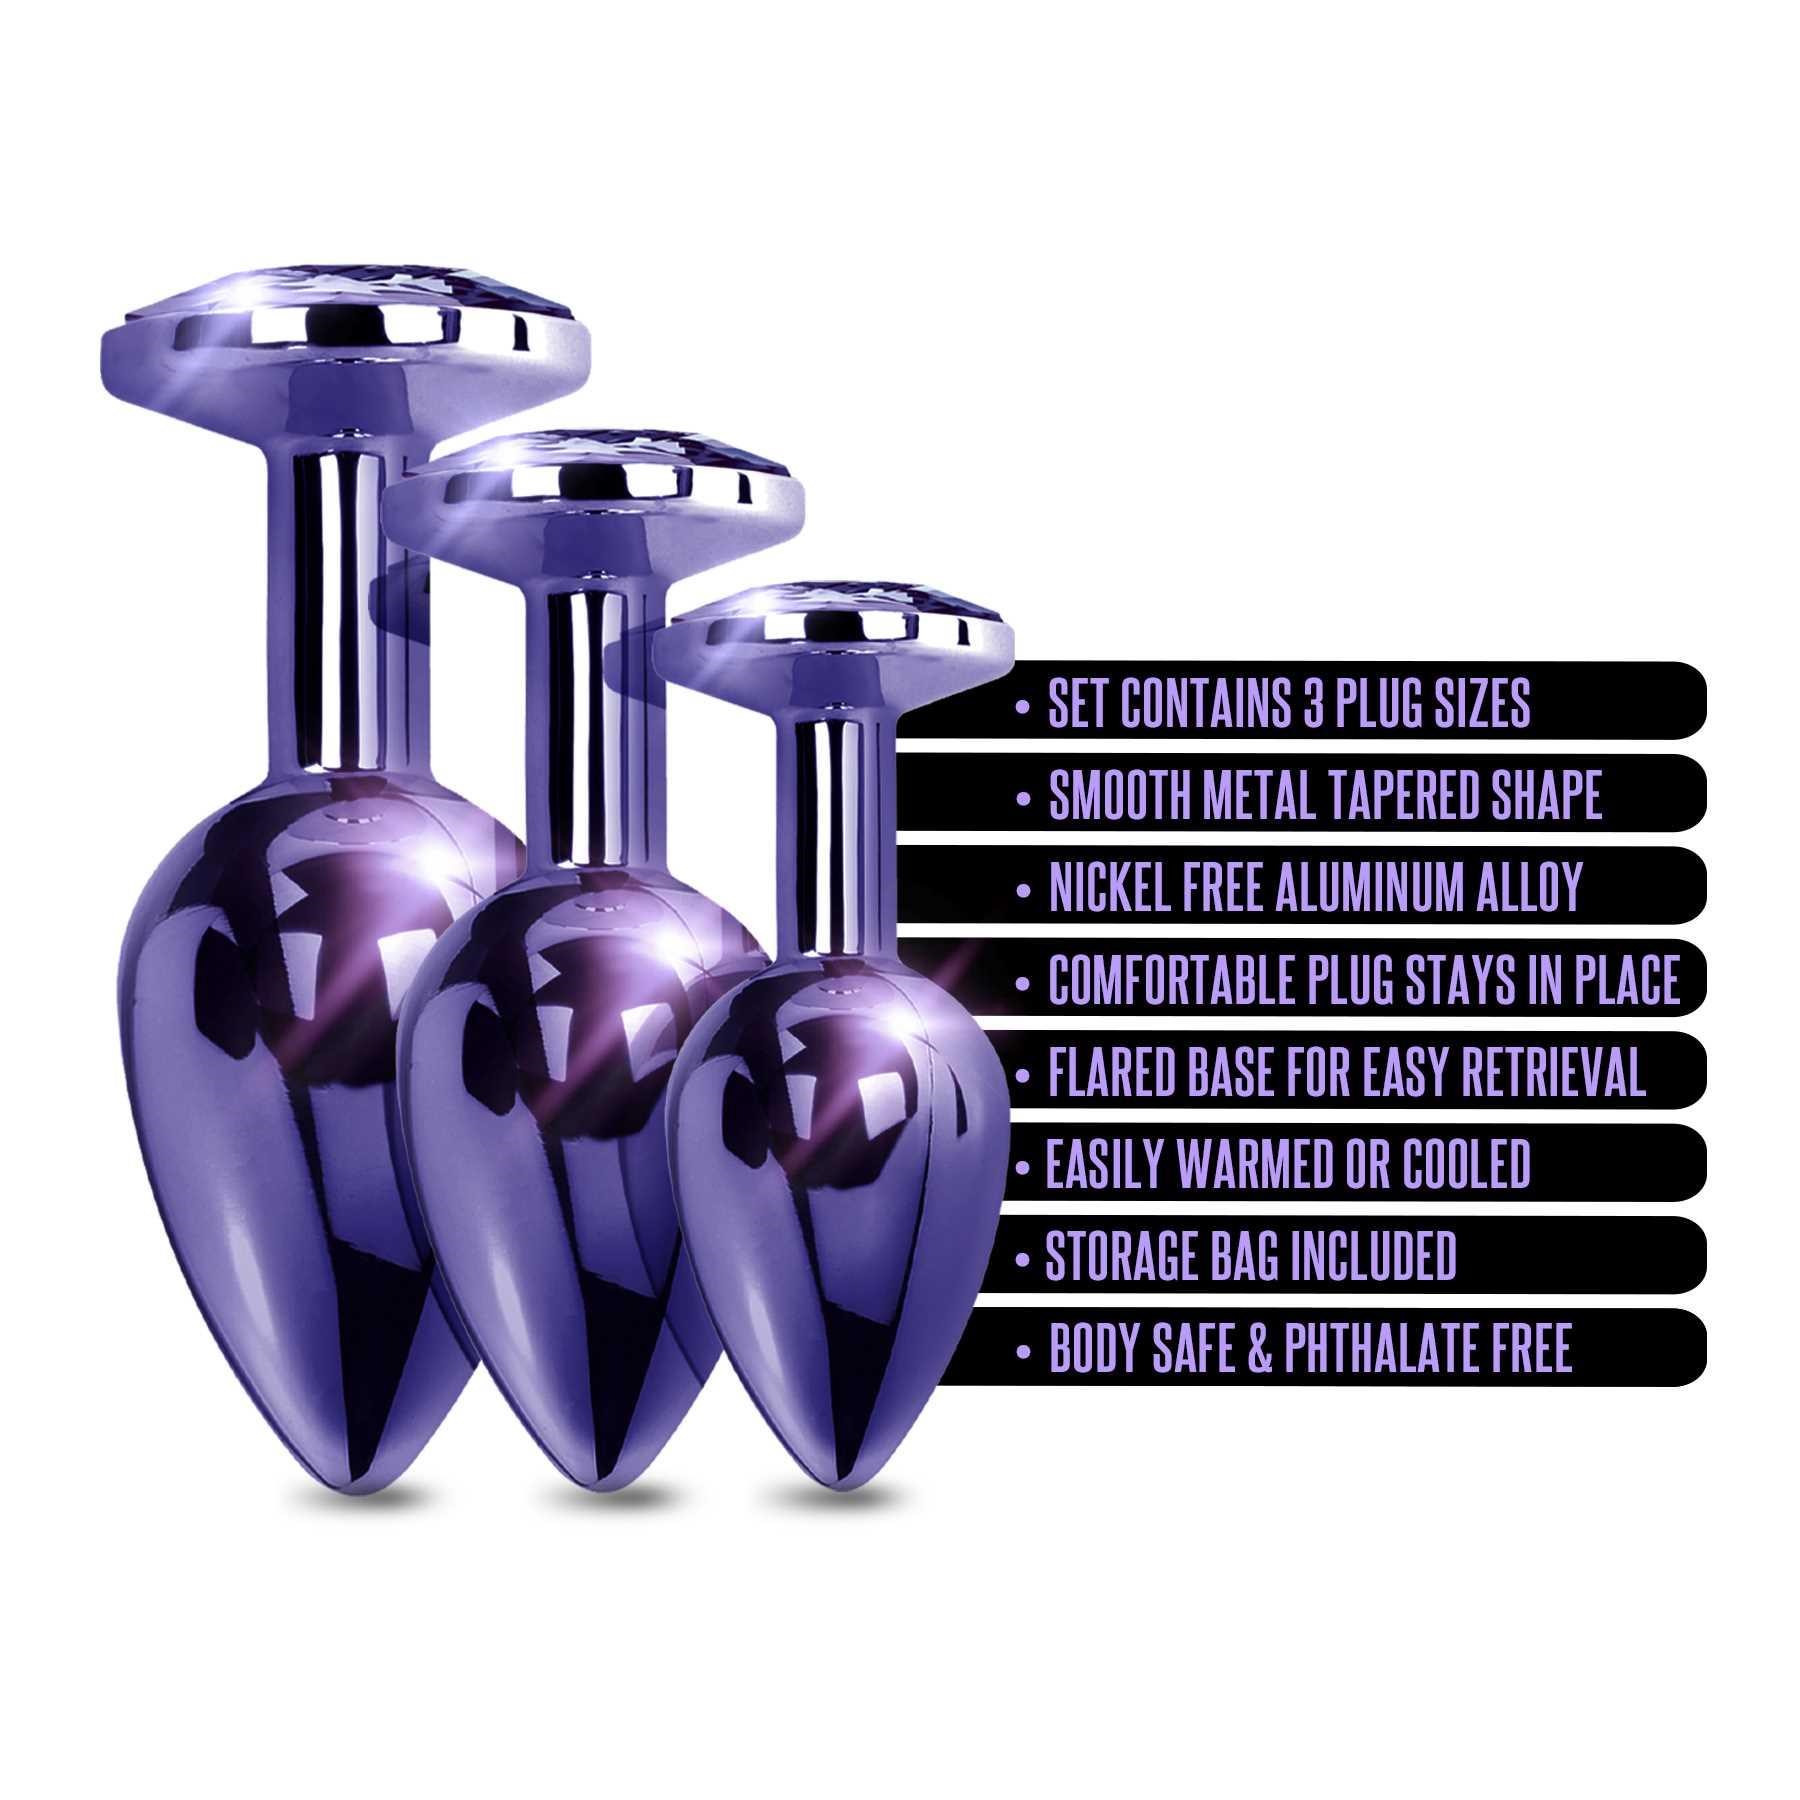 NIXIE Metal Butt Plug Trainer Set Metallic purple feature call outs sheet